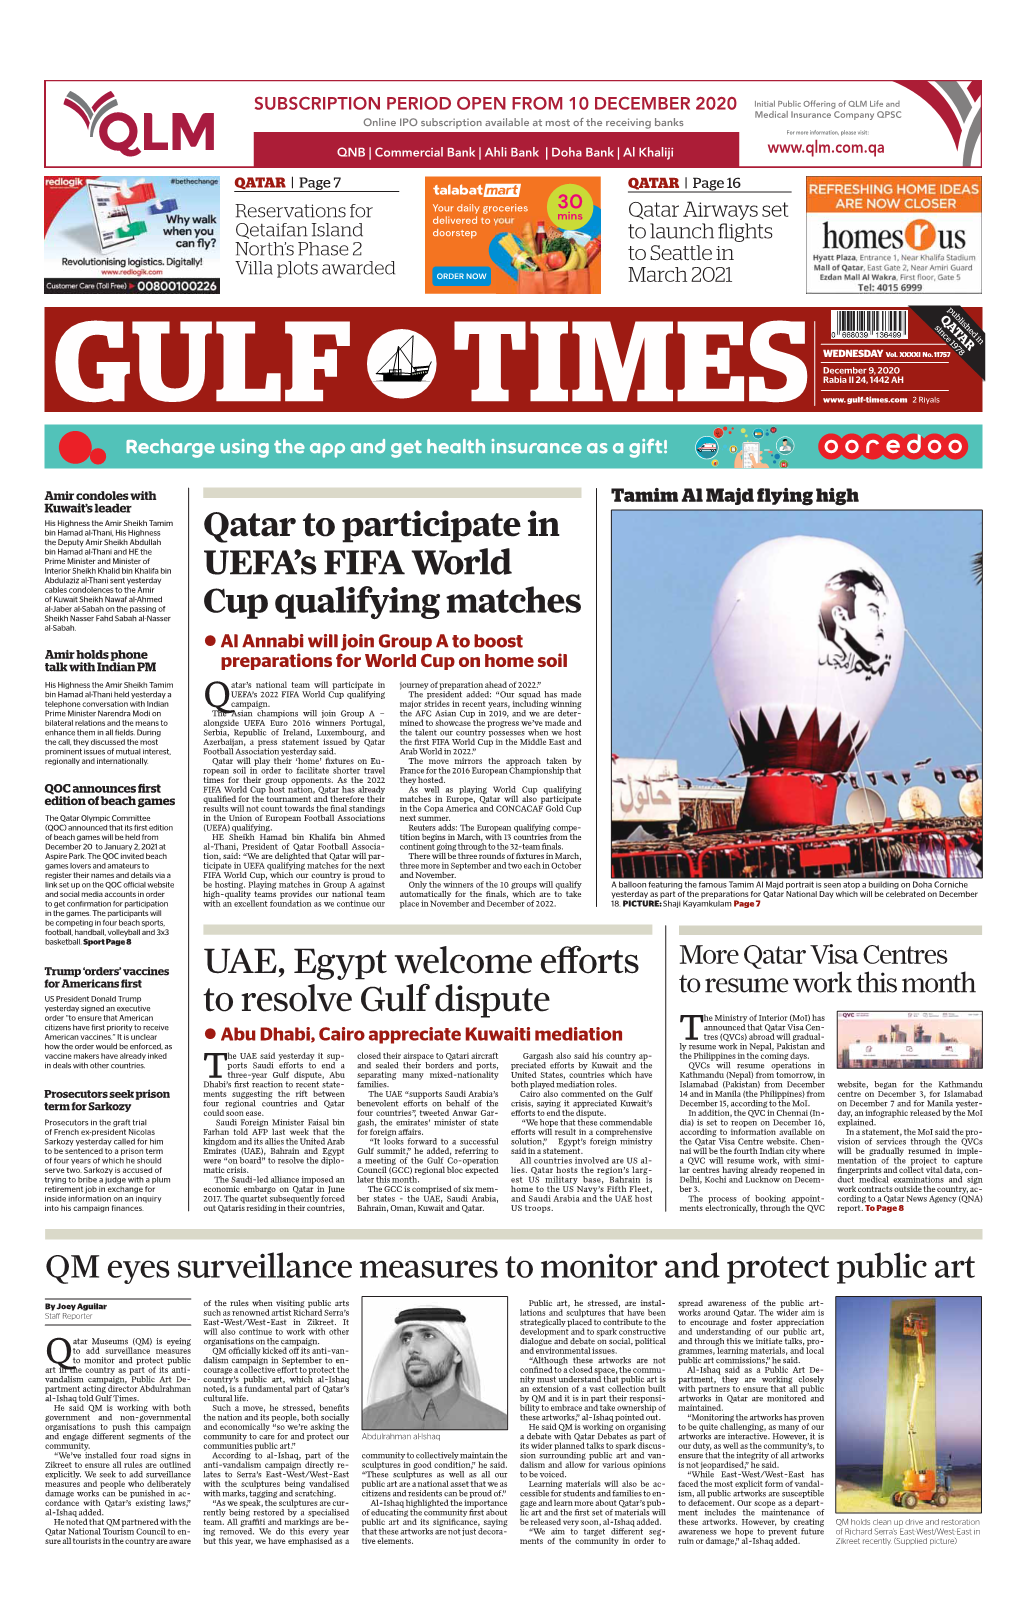 UAE, Egypt Welcome Efforts to Resolve Gulf Dispute